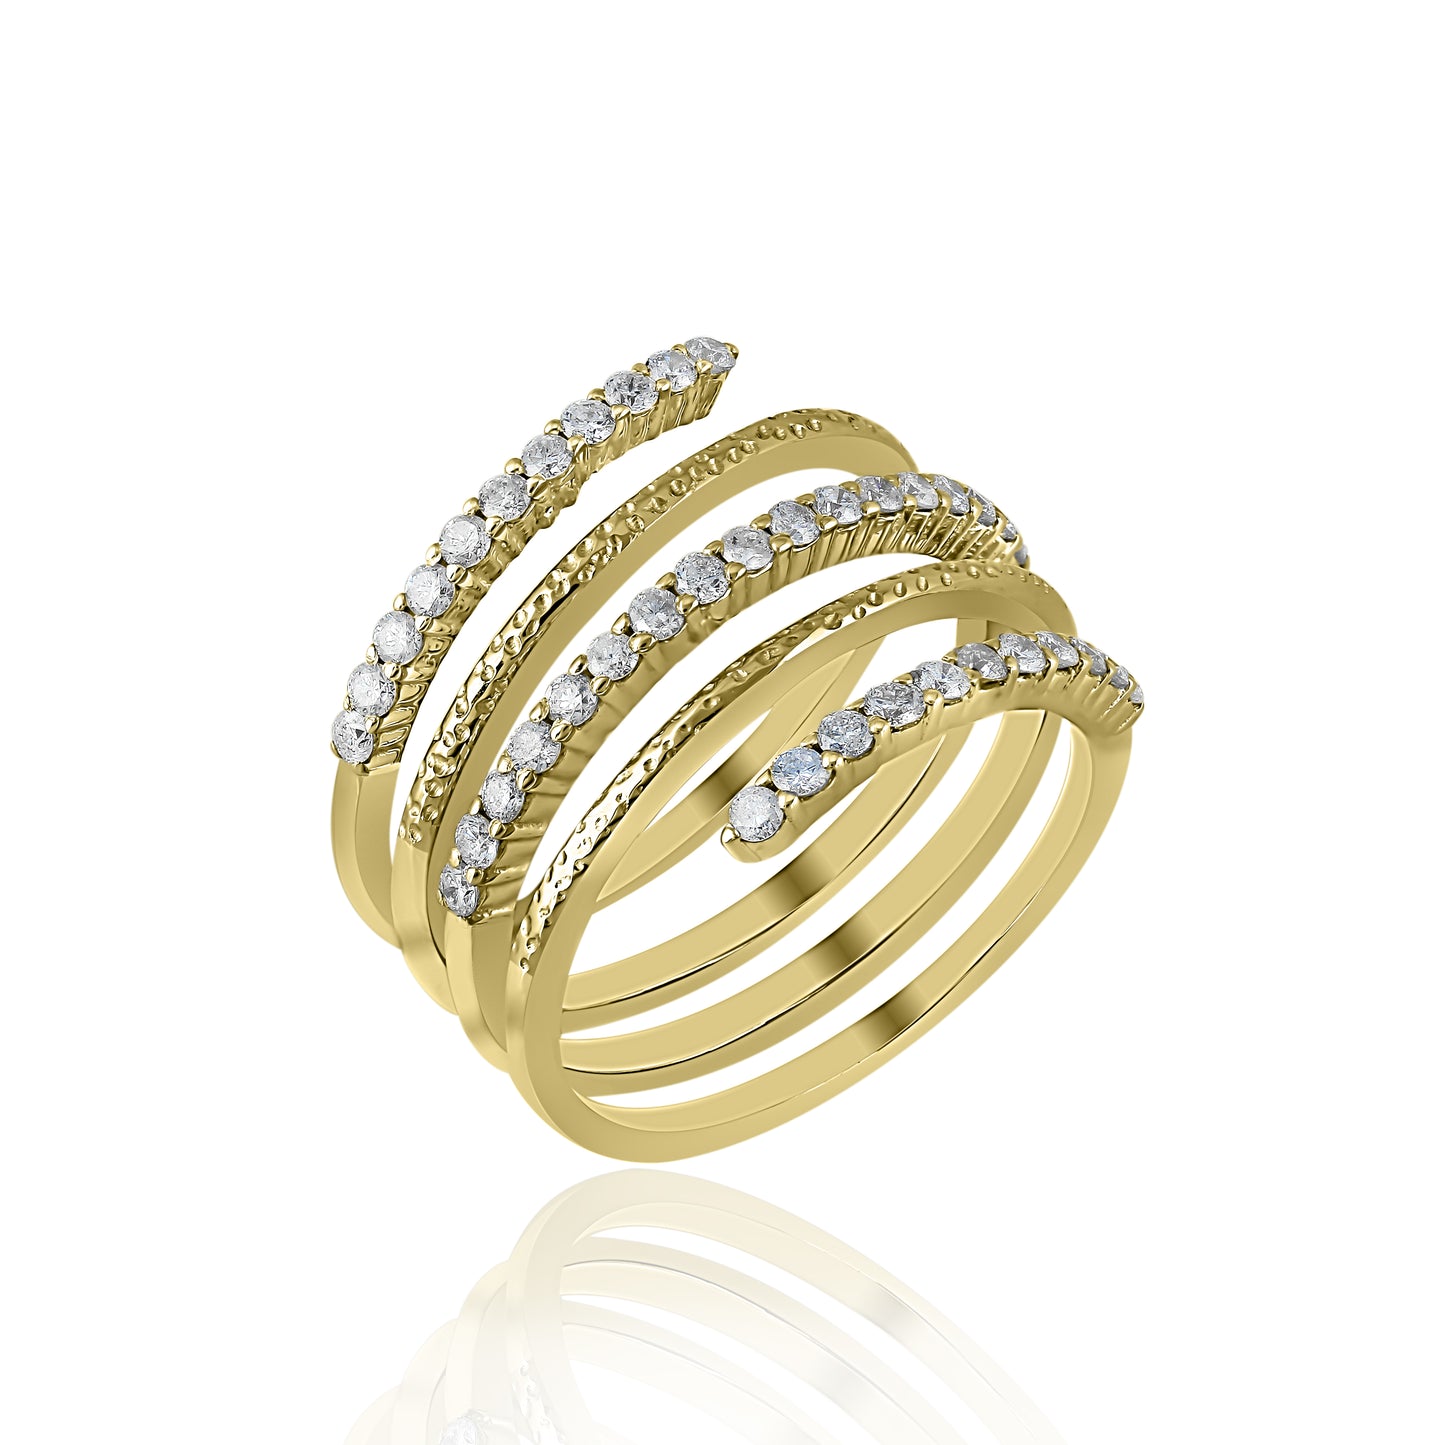 The 14K Yellow Gold Bowery Diamond Spiral Wrap Ring